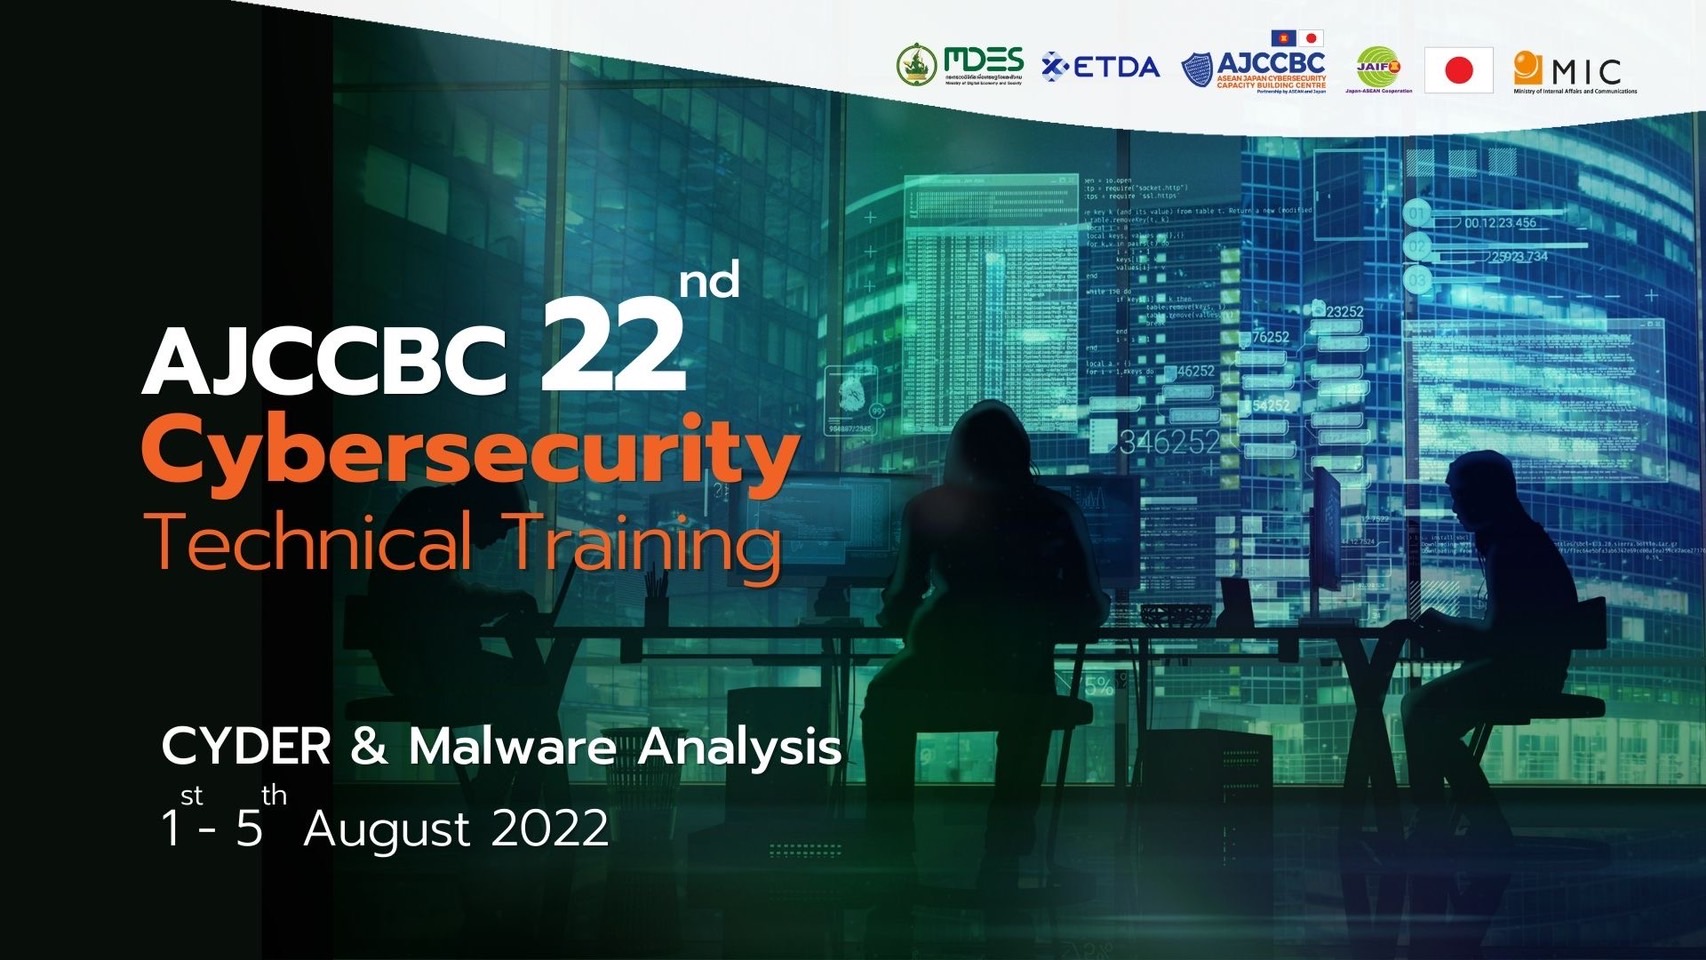 AJCCBC ส่งเสริมบุคลากรด้าน Cybersecurity ประเทศสมาชิกอาเซียน เพื่อยกระดับการเป็นผู้เชี่ยวชาญ ด้านความปลอดภัยในโลกไซเบอร์